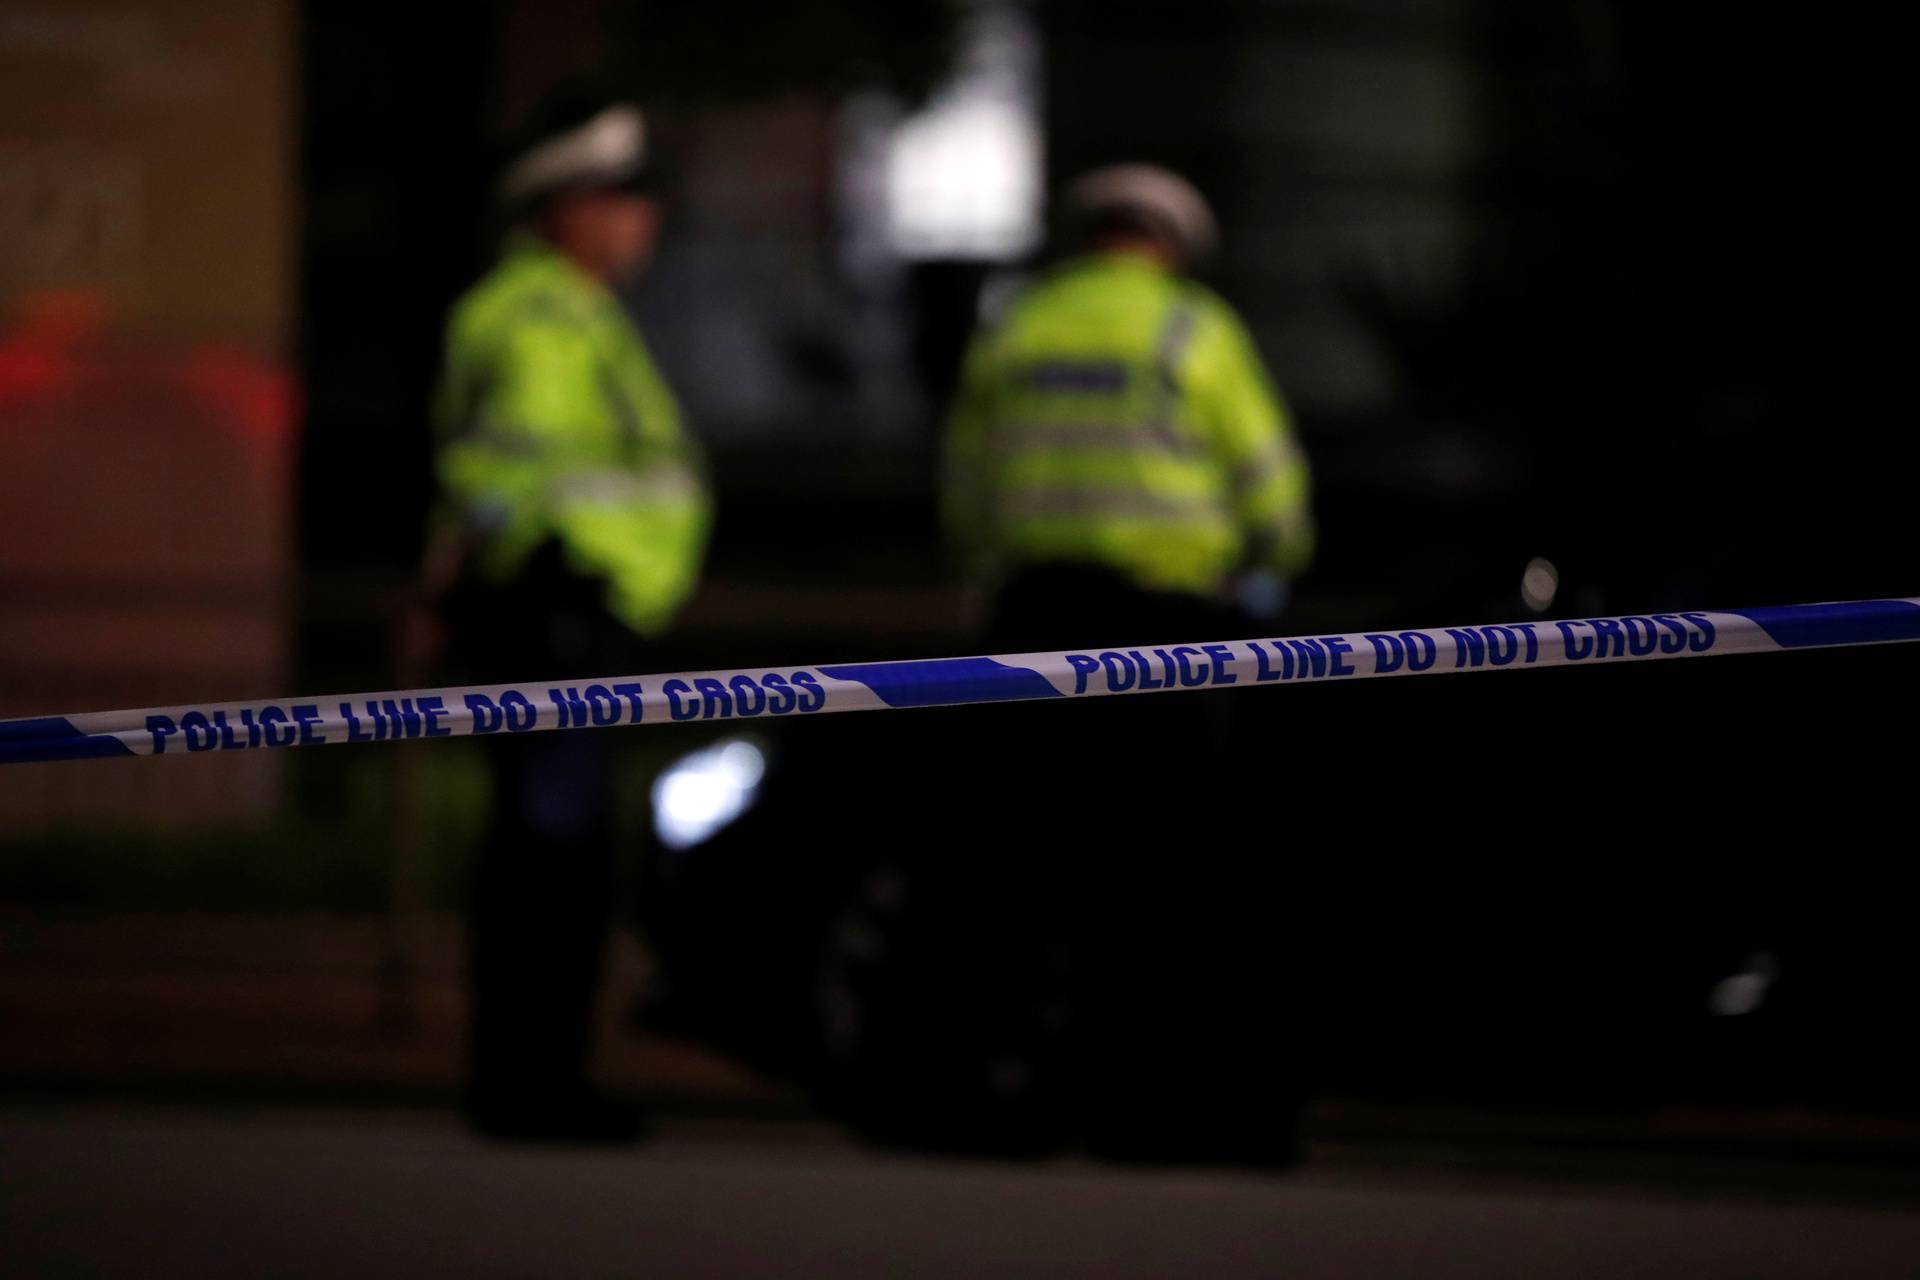 Scene of reported multiple stabbings in Reading